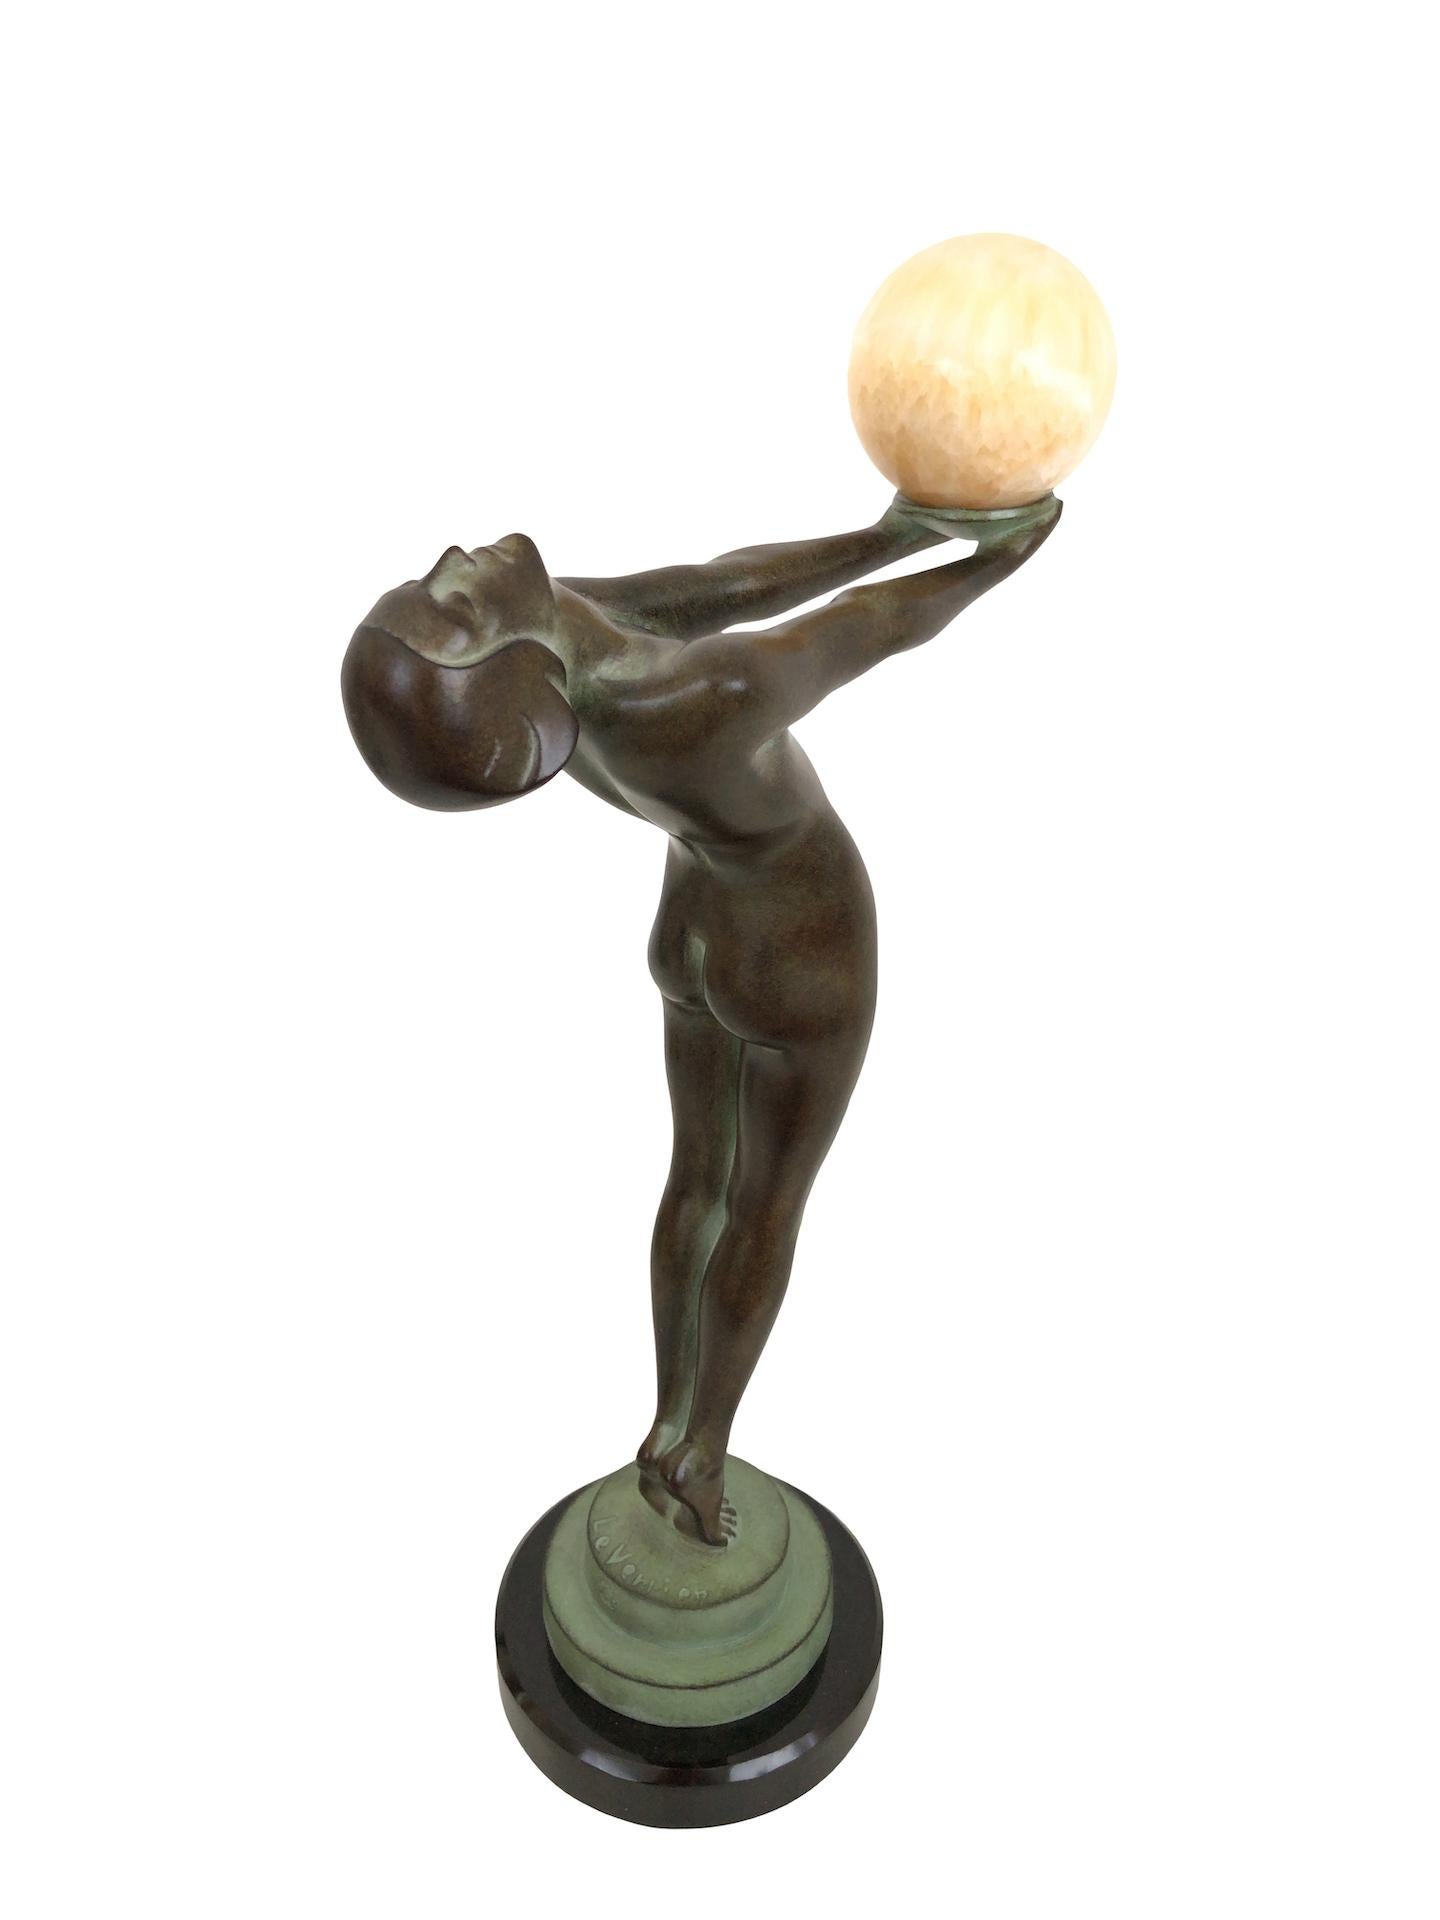 Patinated Art Deco Style Dancer Sculpture Clarté with Jade Ball Original Max Le Verrier